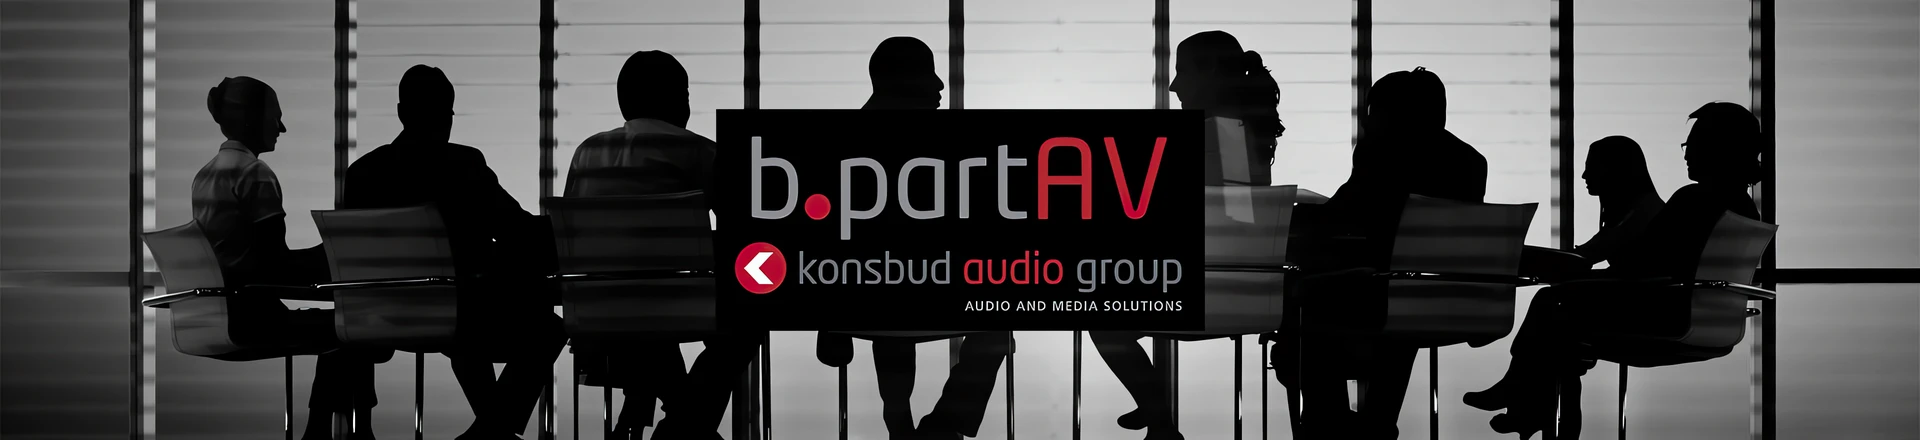 Konsbud Audio wprowadza nowy brand b.partAV dedykowany branży ProAV 